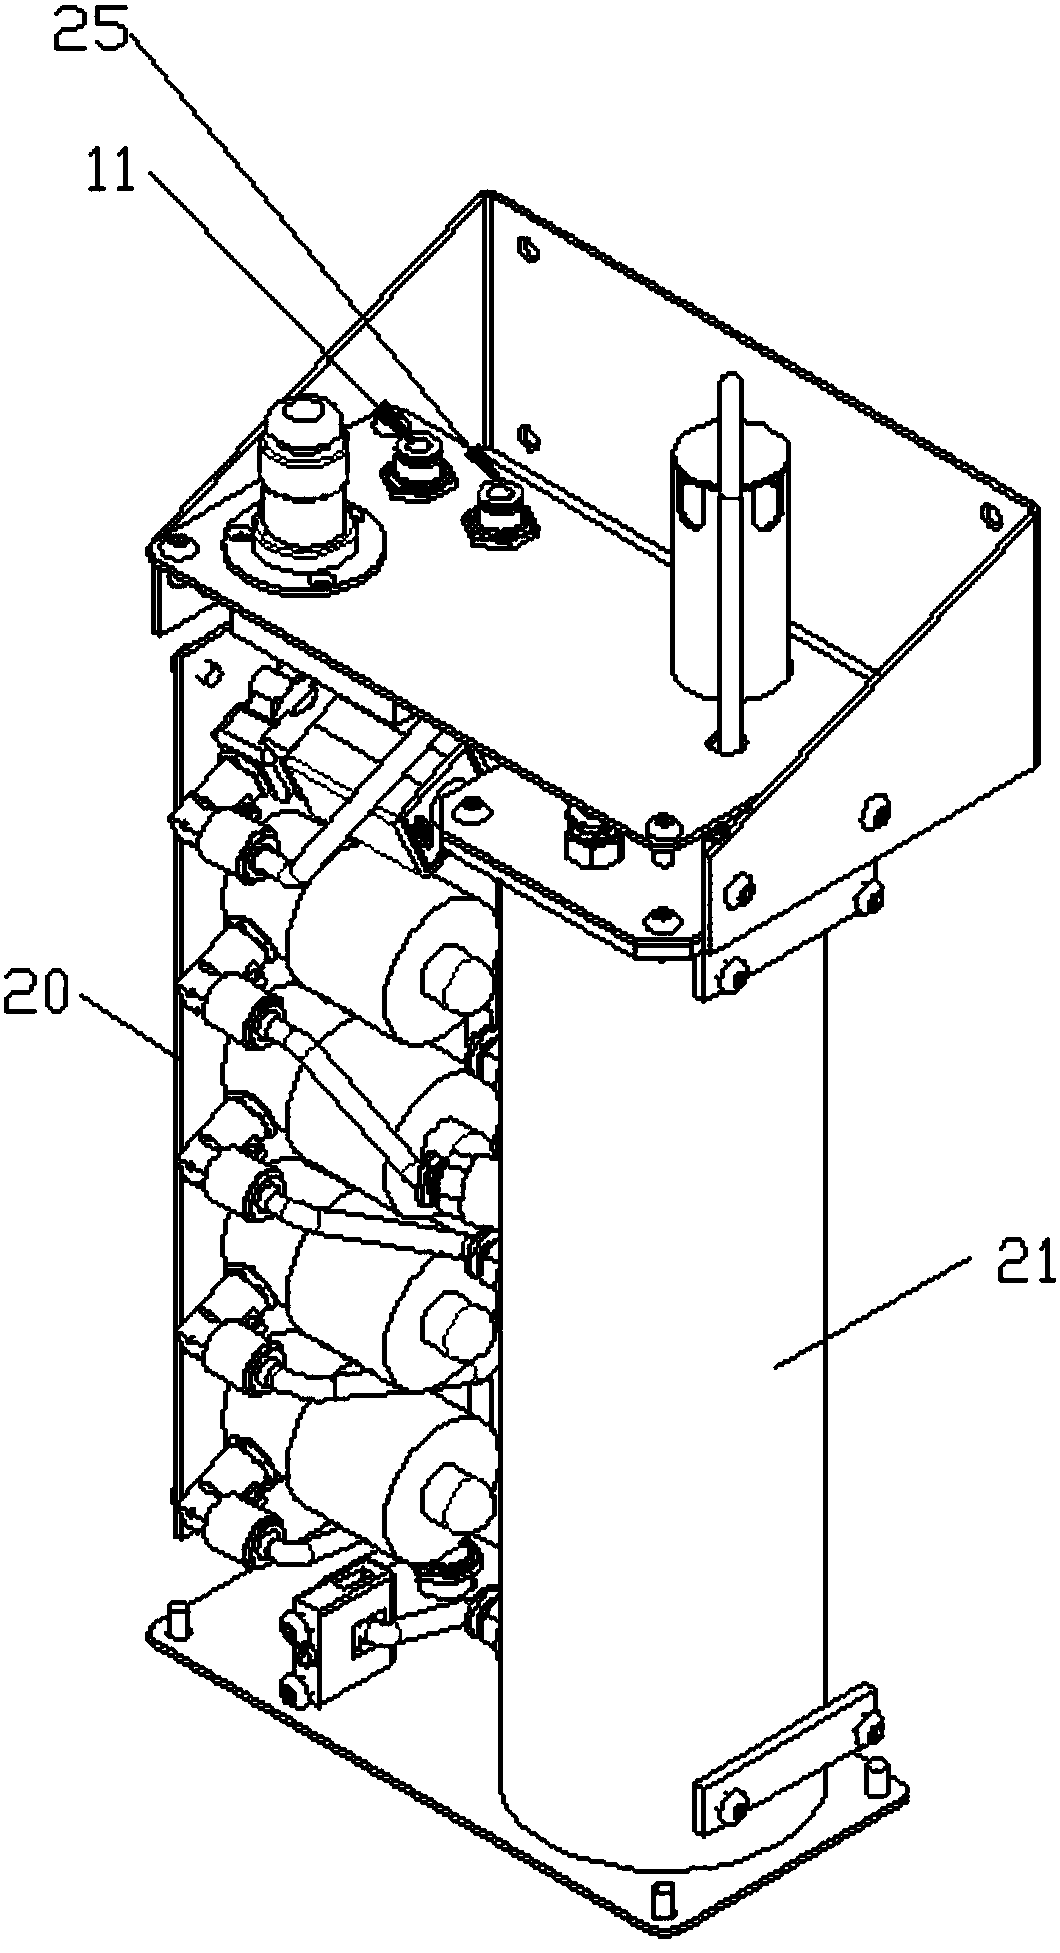 A flotation column dosing system and dosing method